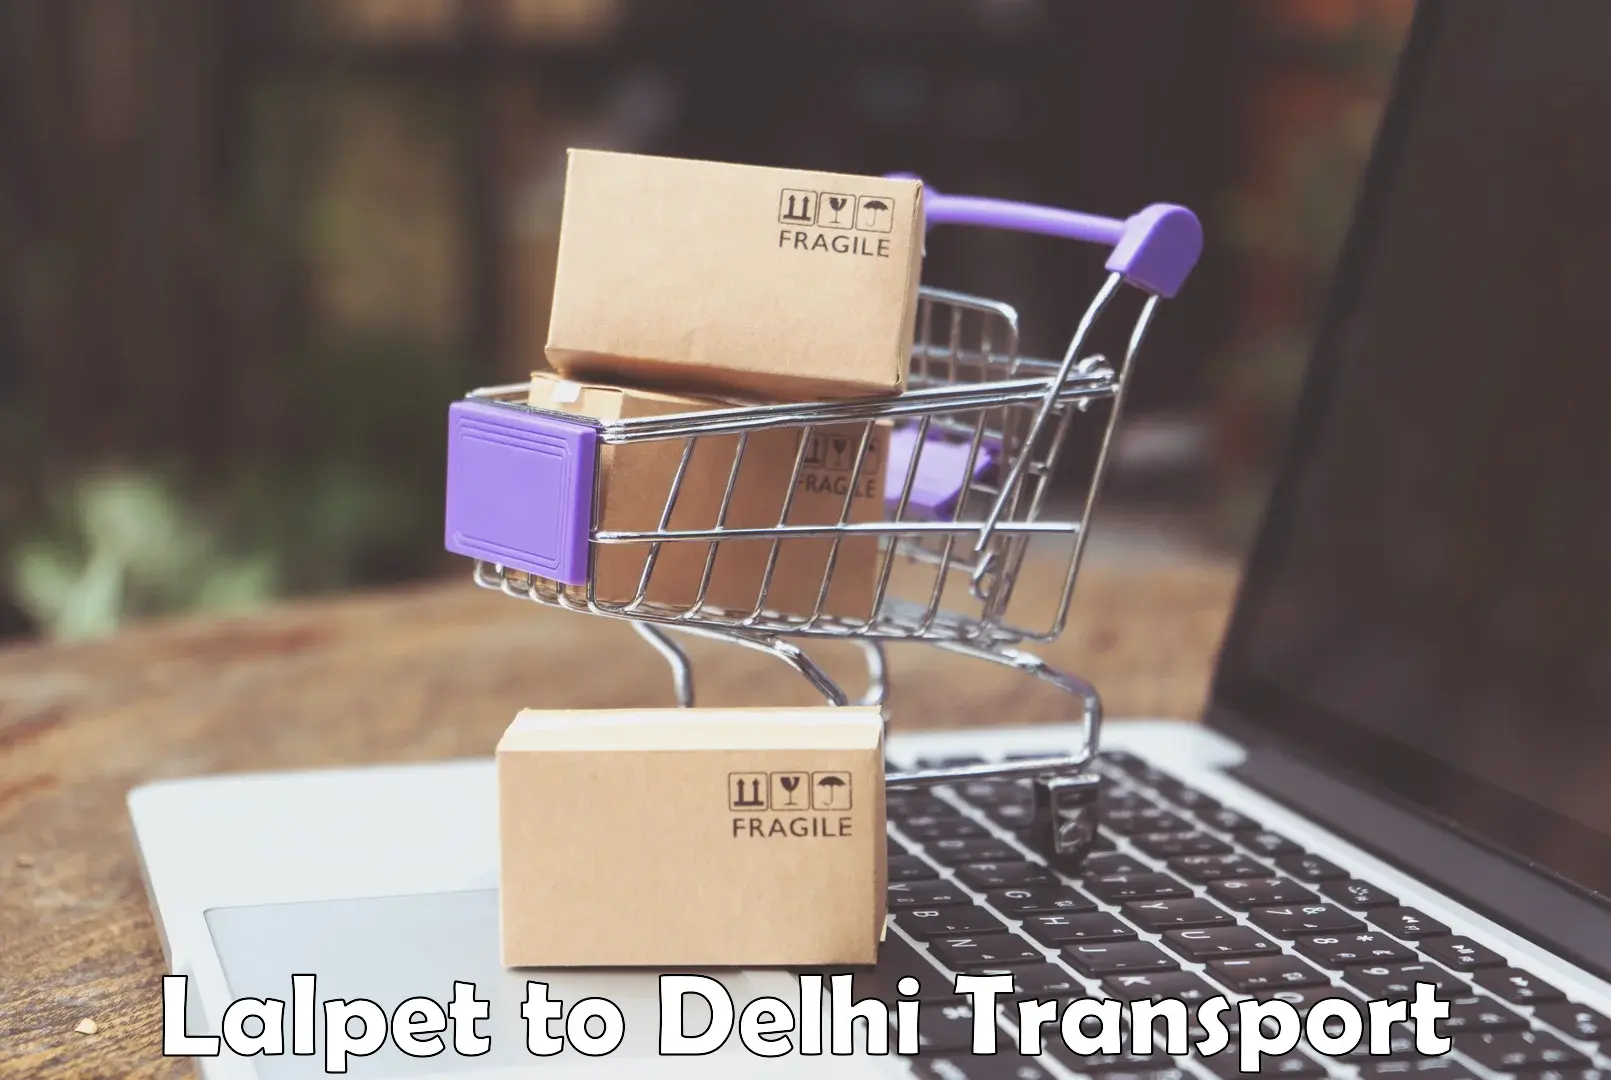 Commercial transport service Lalpet to Delhi